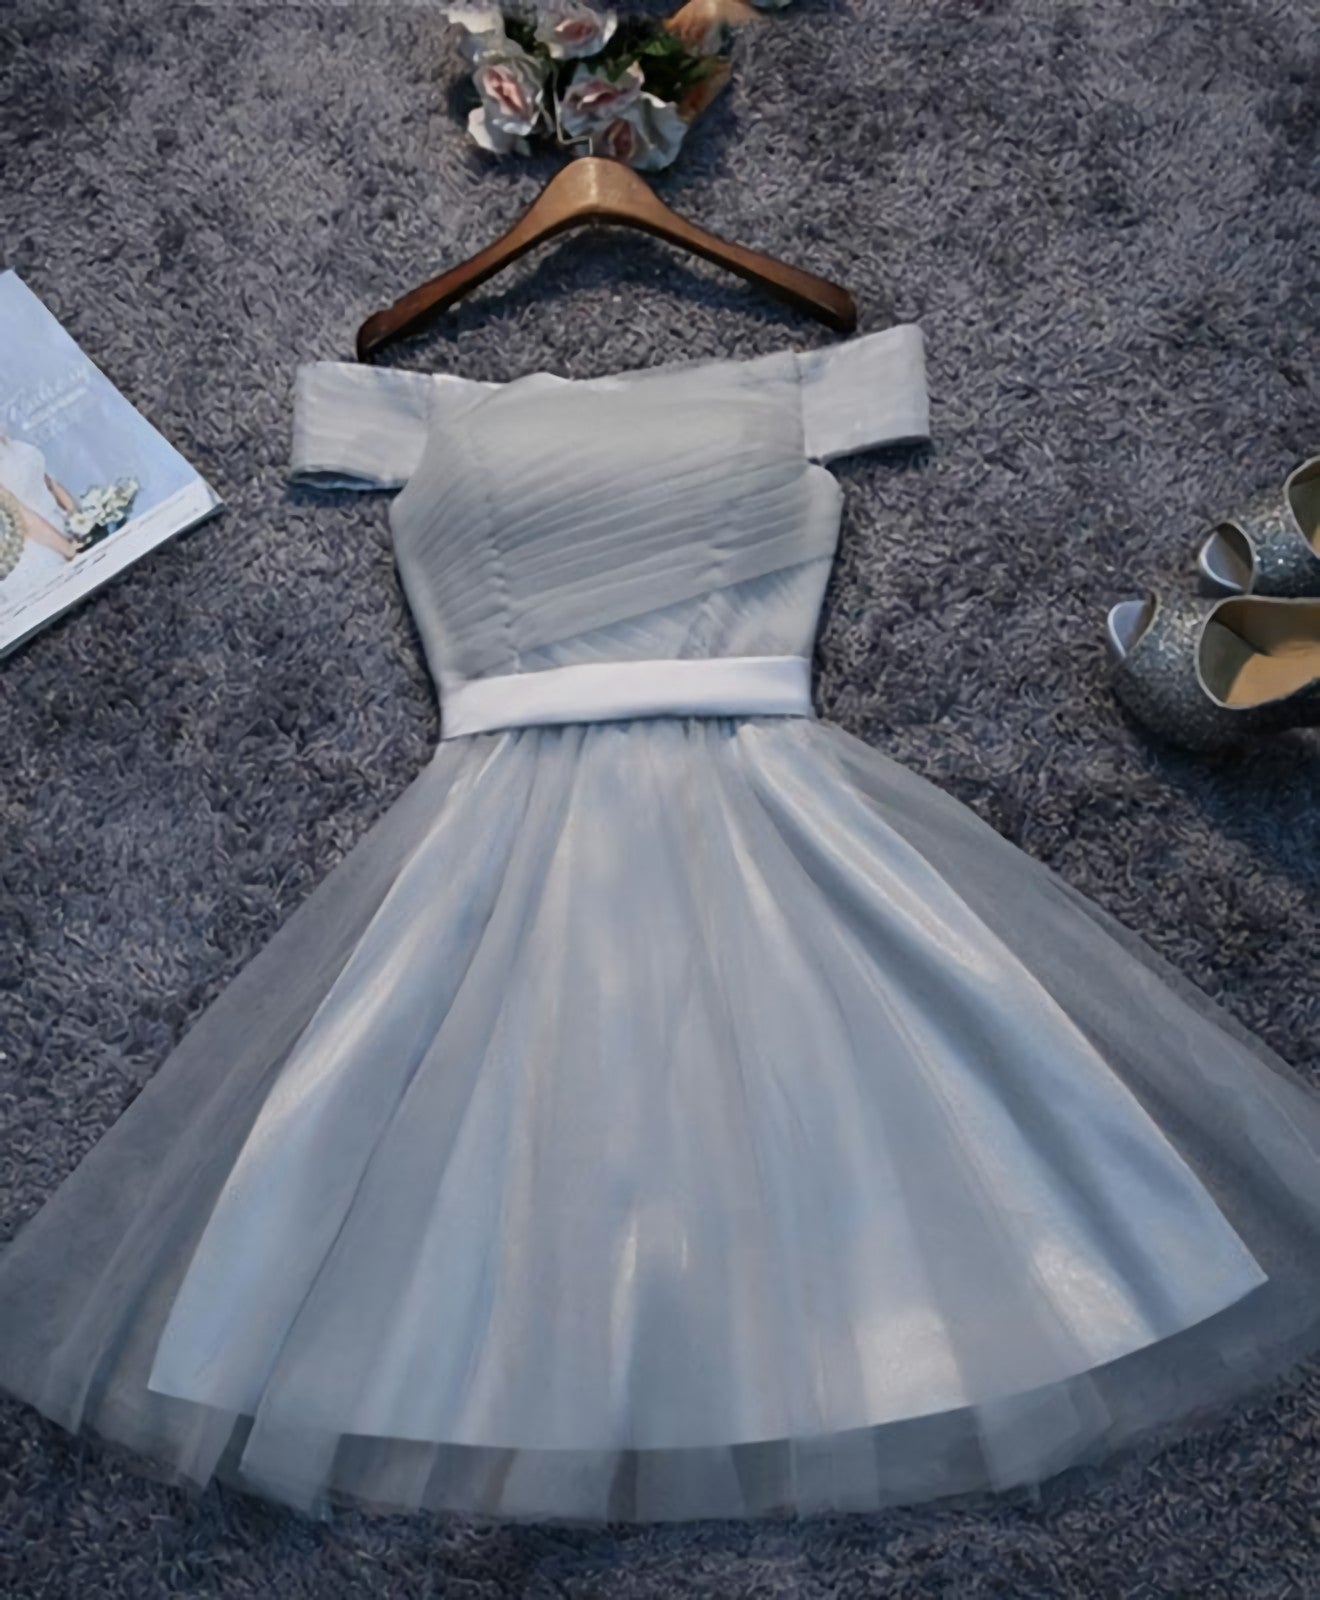 Prom Dresses 2019, Simple Gray Tulle Mini Prom Dress, Homecoming Dress